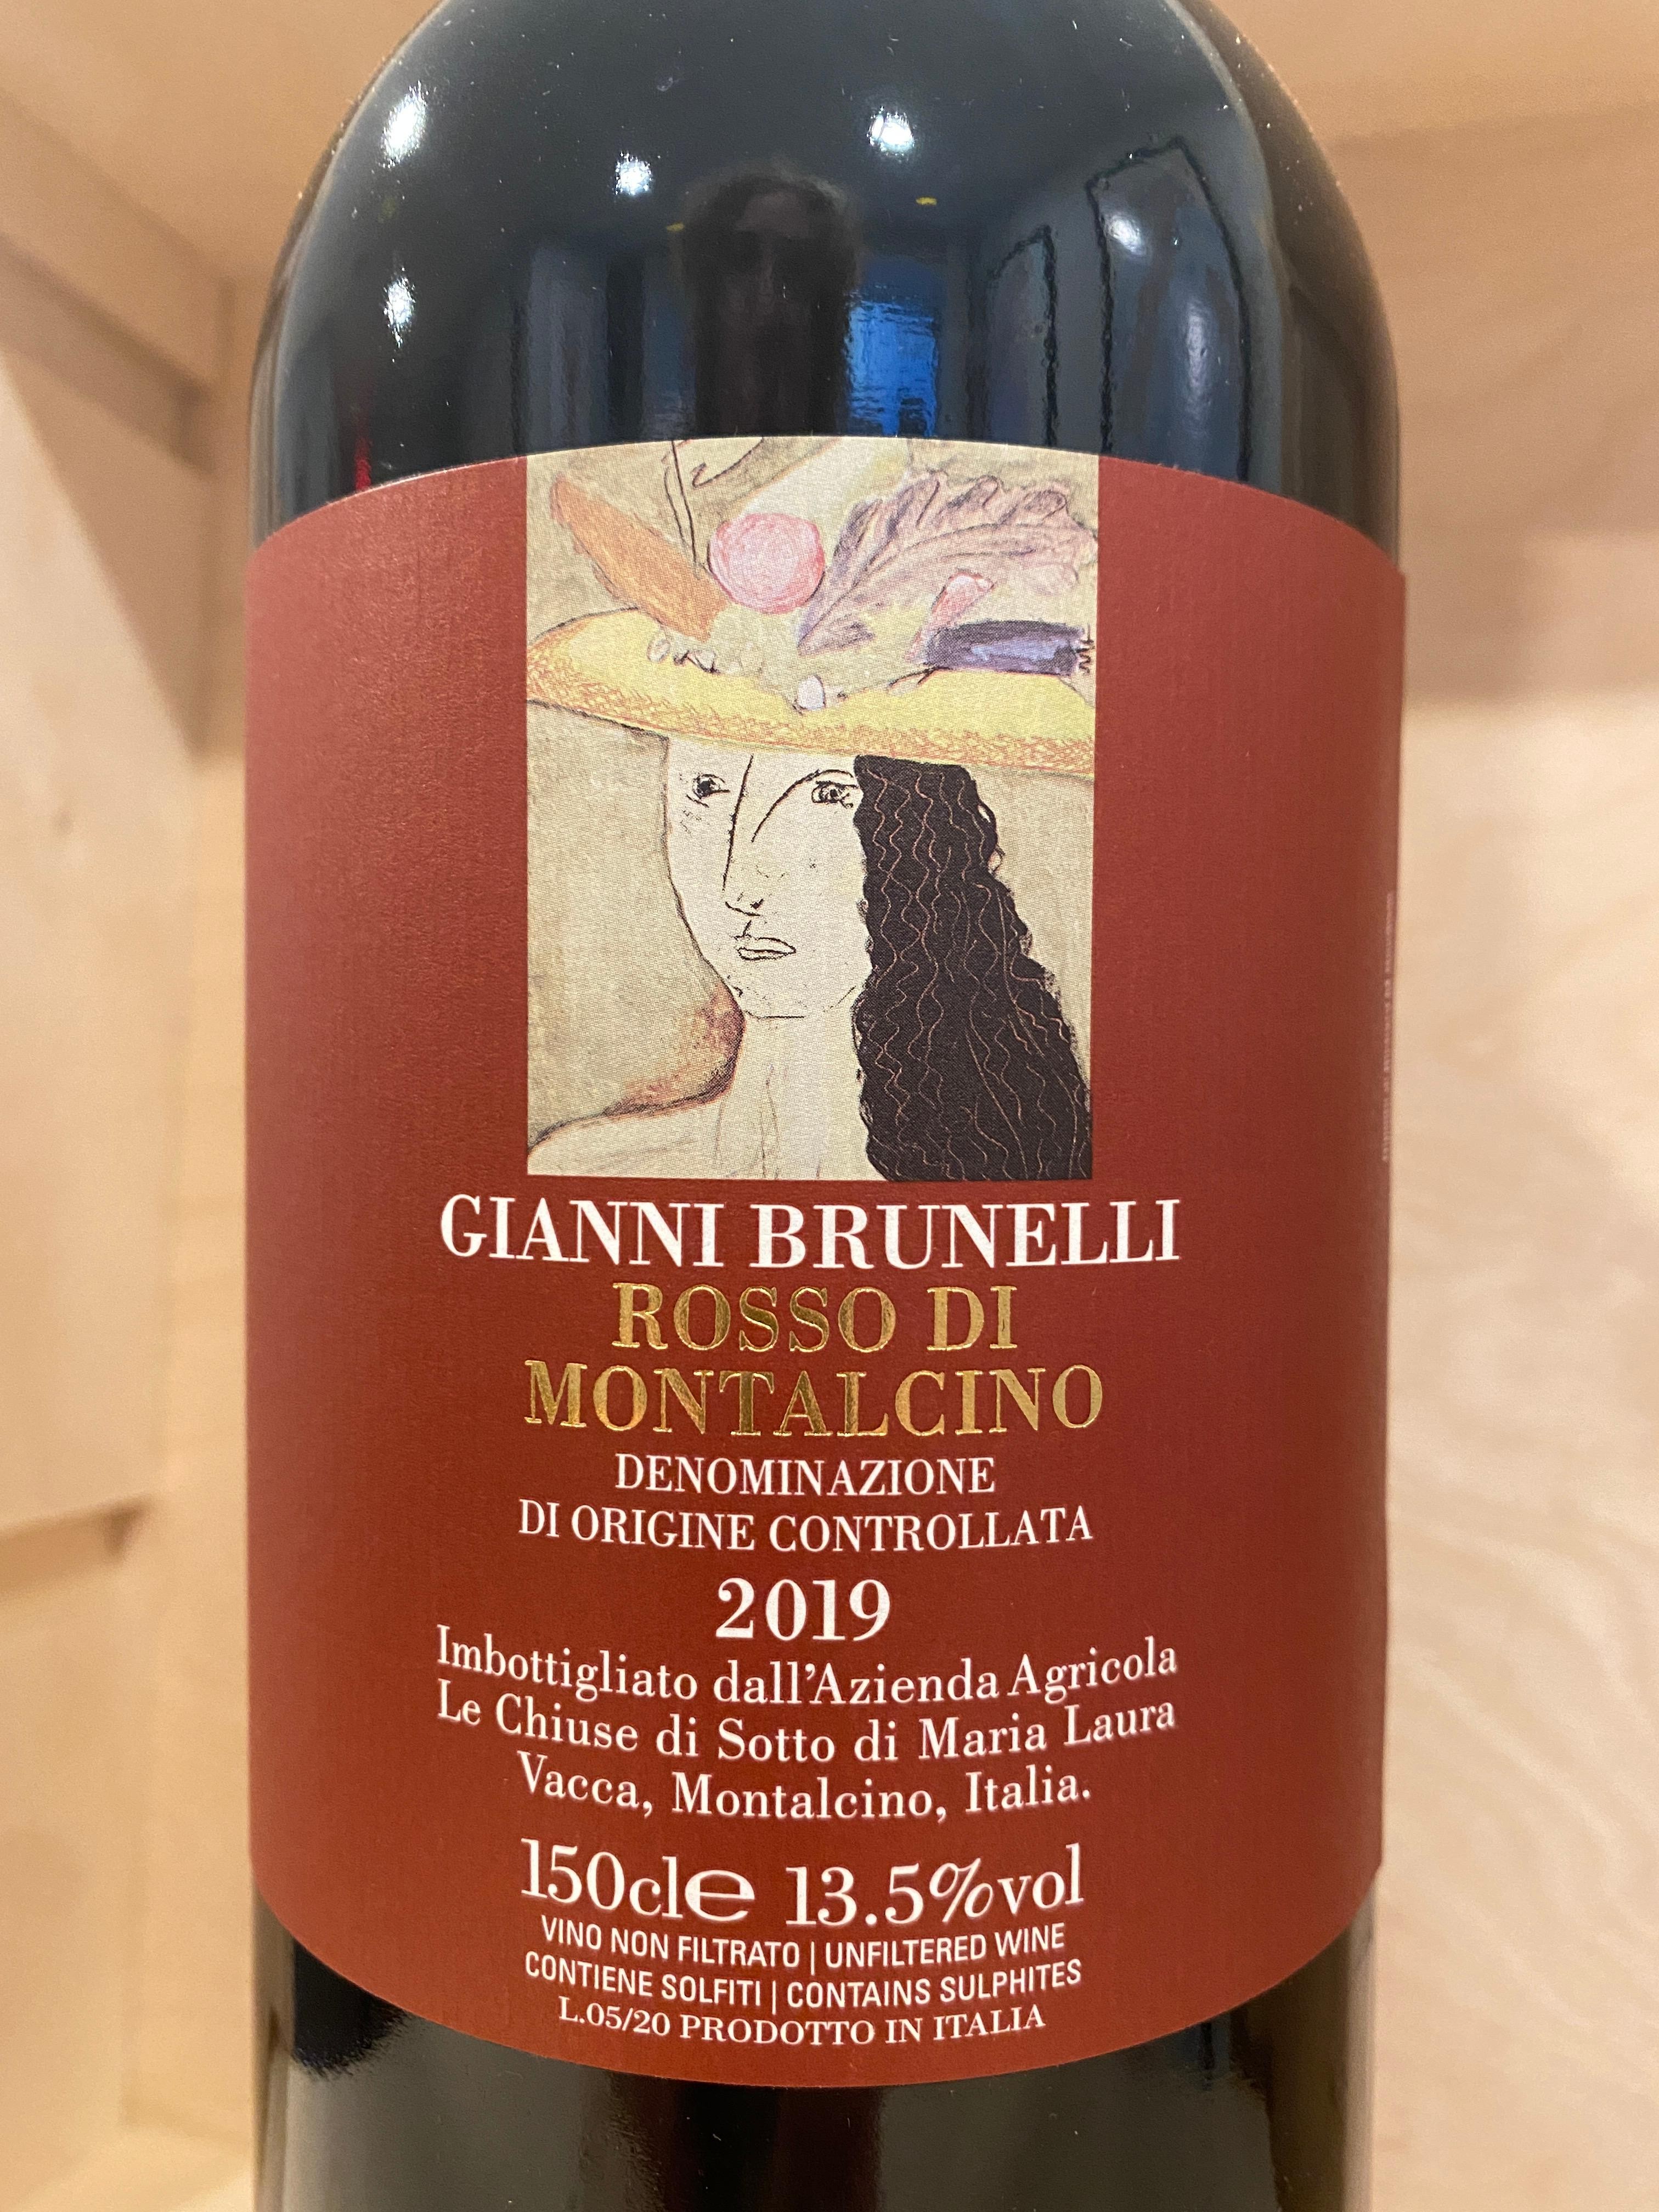 Gianni Brunelli Rosso di Montalcino 2019: Tuscany, Italy (magnum bottle, 1.5L)